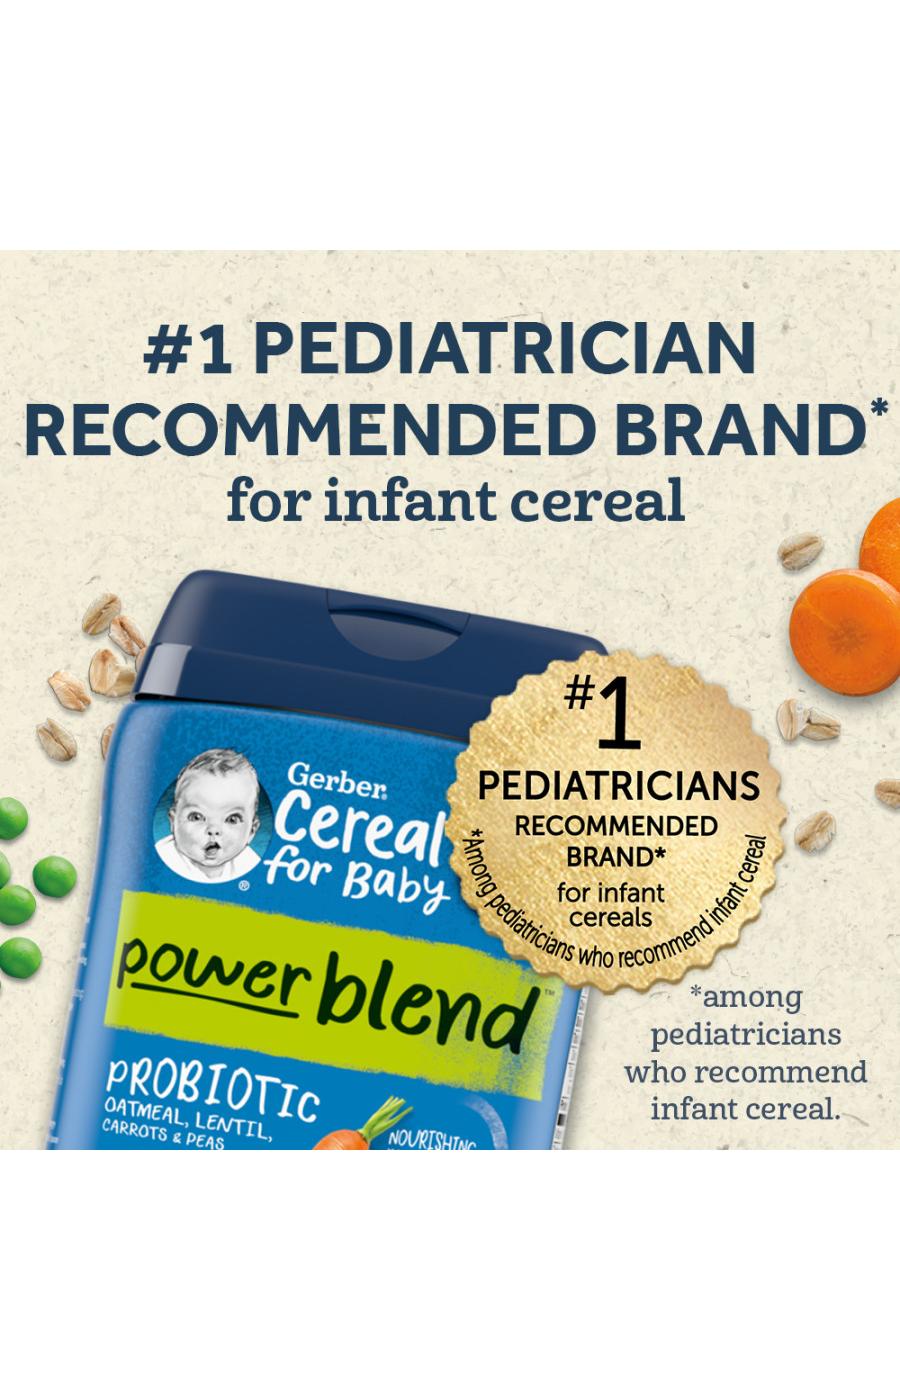 Gerber Cereal for Baby PowerBlend Probiotic - Oatmeal Lentil Carrots & Apples; image 4 of 8